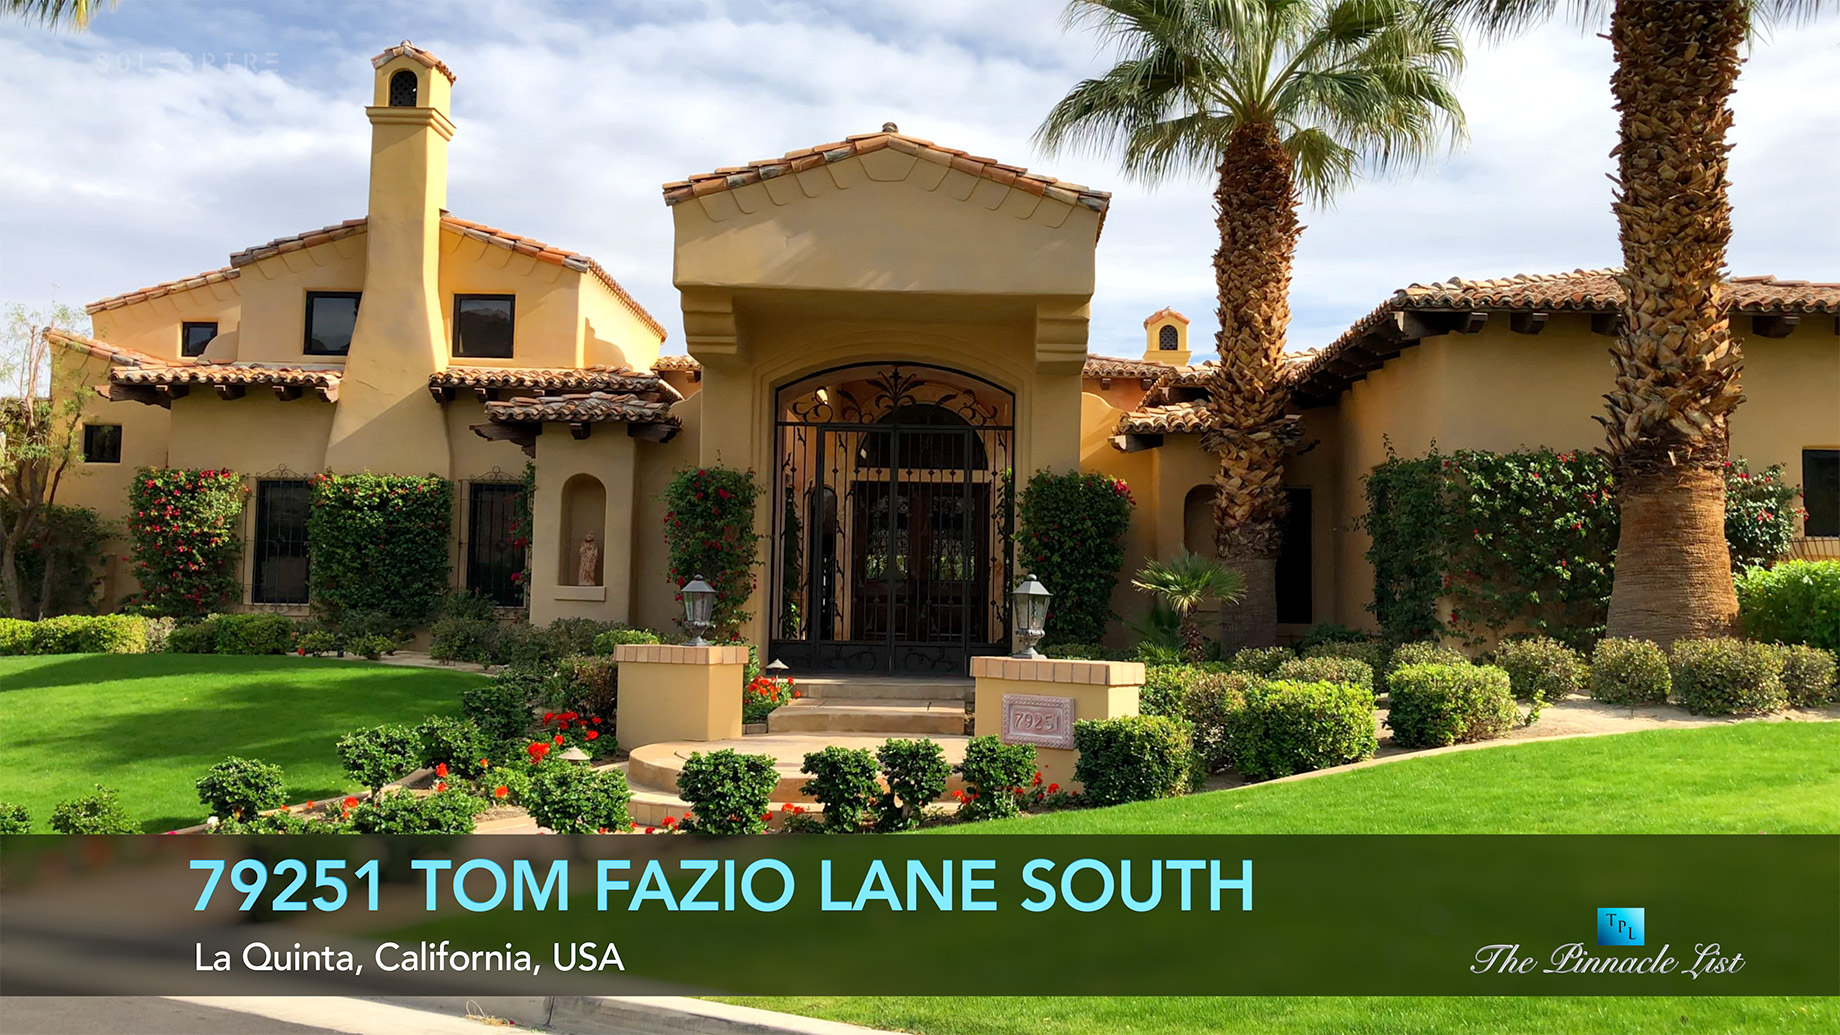 79251 Tom Fazio Ln S, La Quinta, CA, USA - Marcus Anthony & Josh Reef - Luxury Real Estate - Video